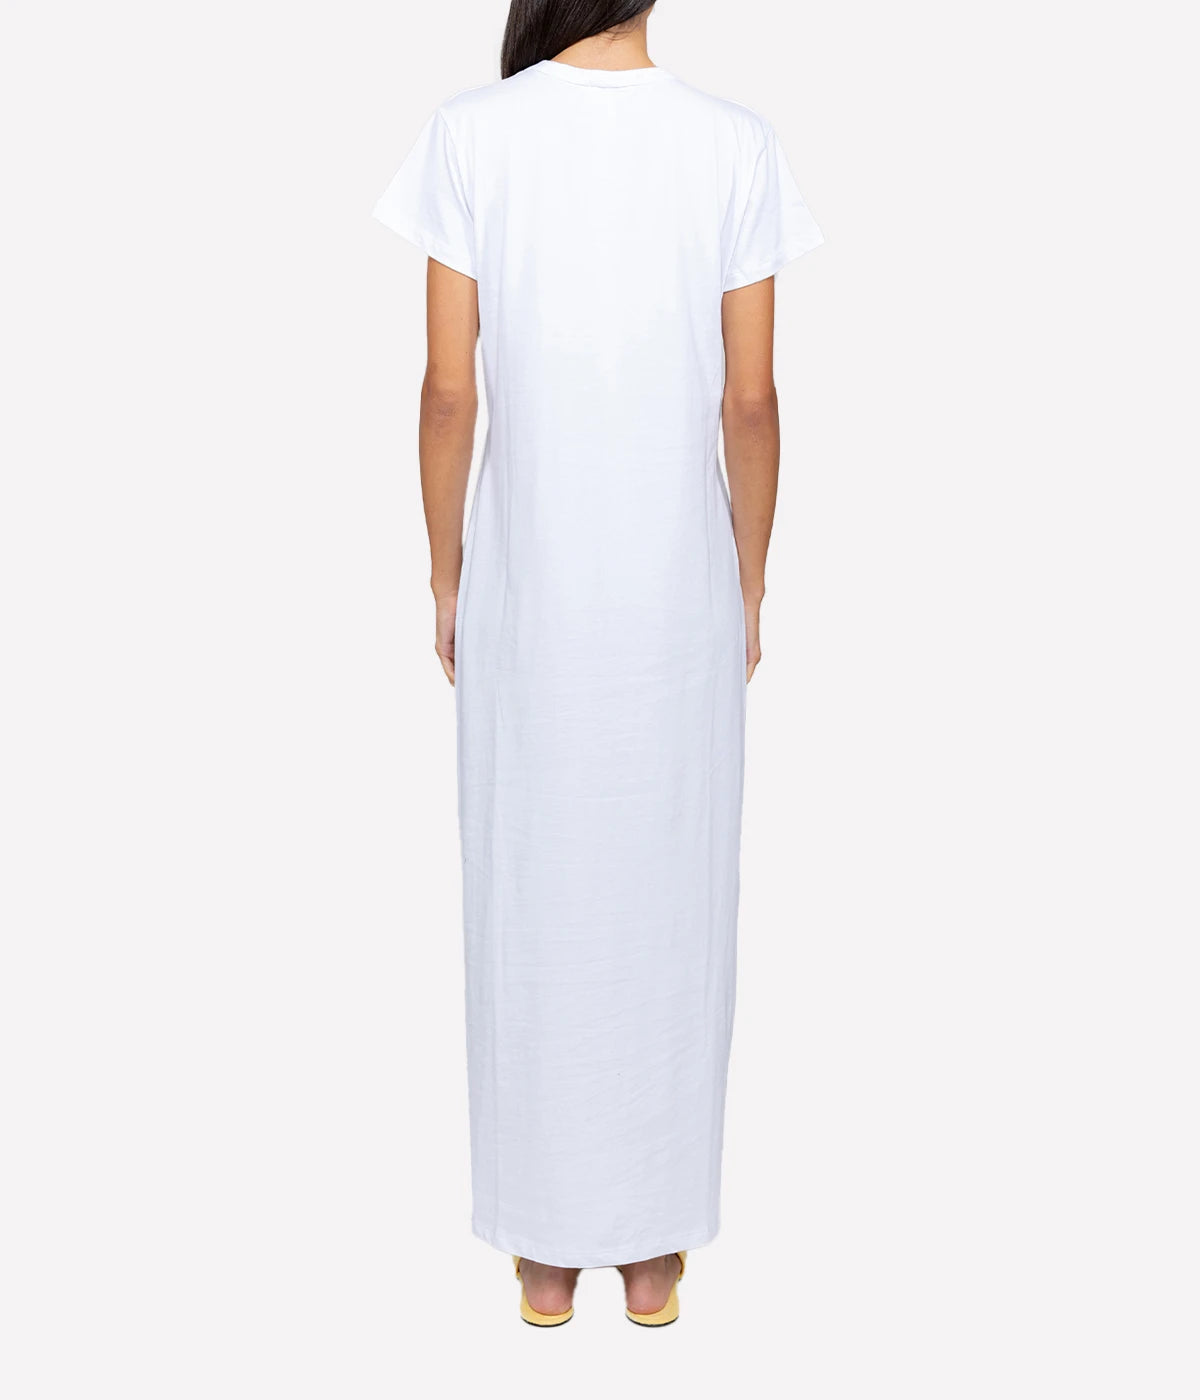 Margo Maxi Dress in White